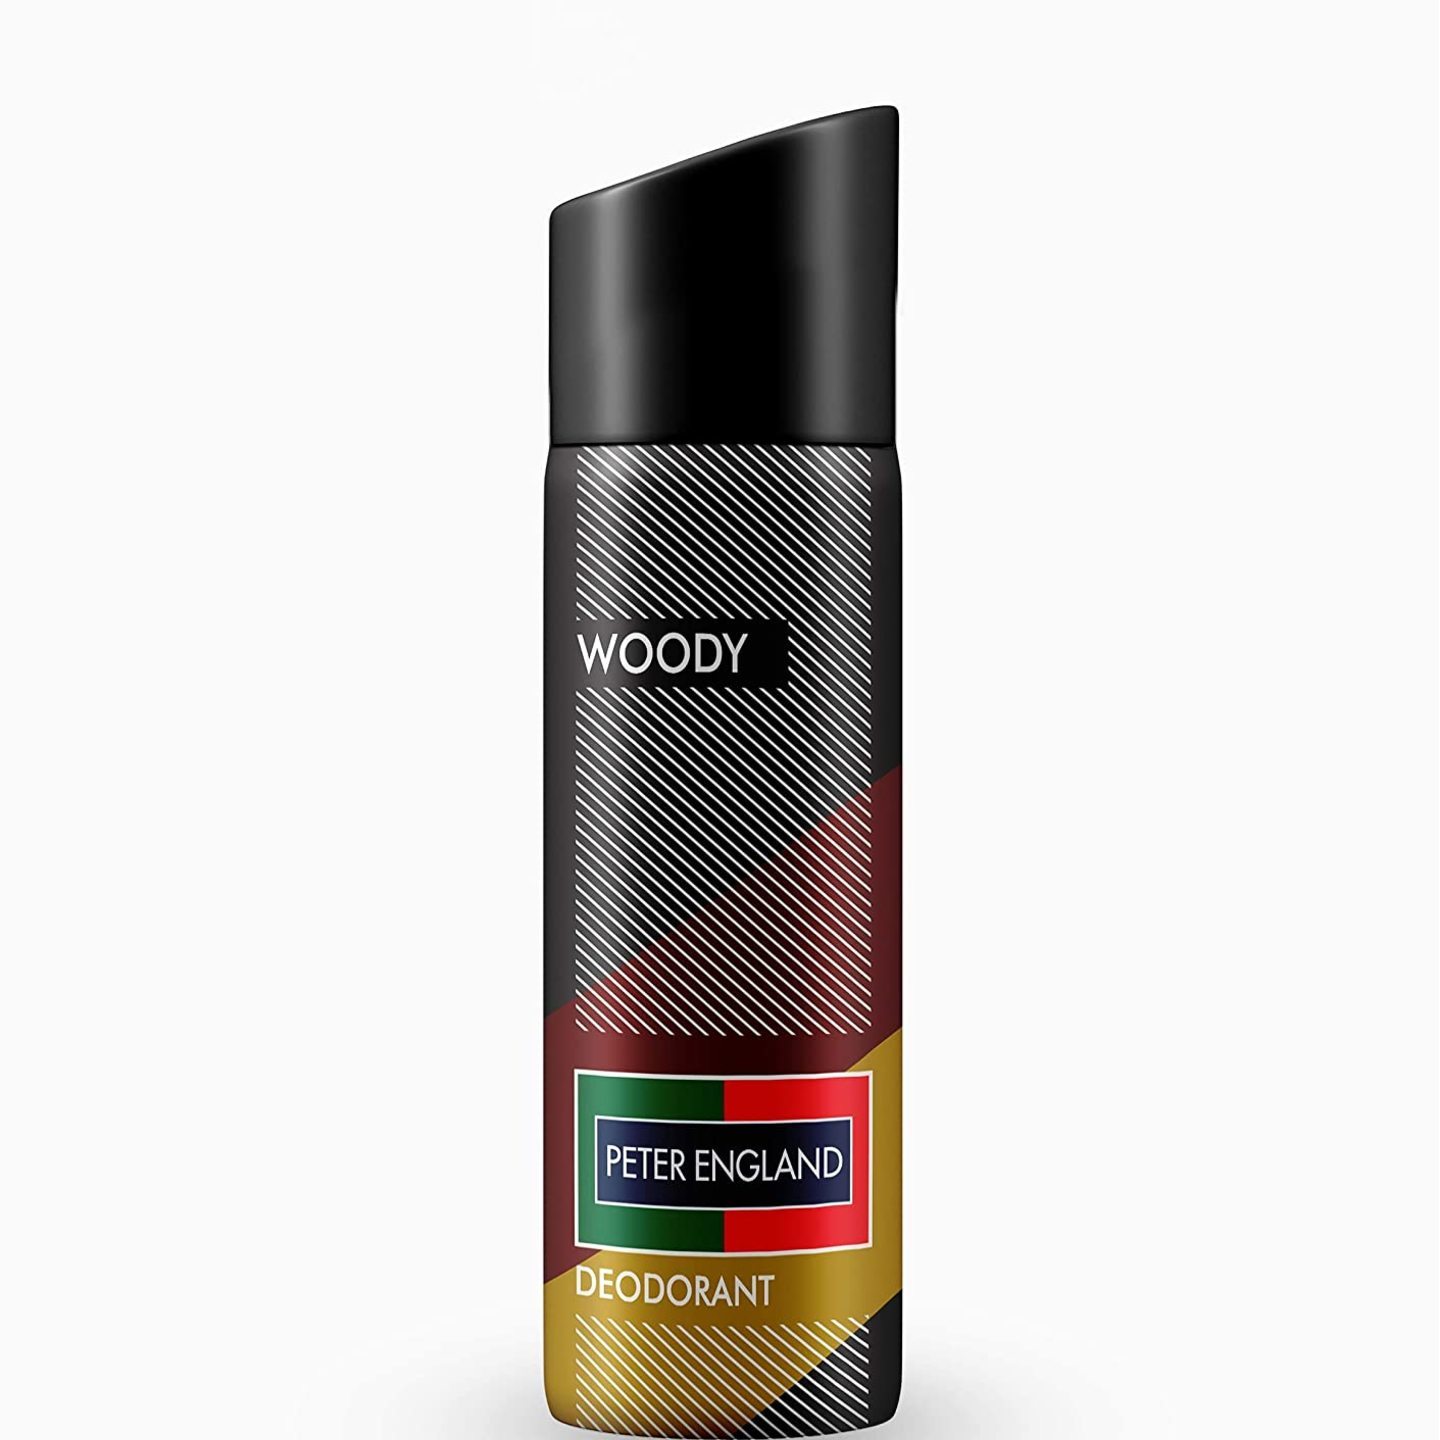 Peter England Woody Deodorant, 150 ml